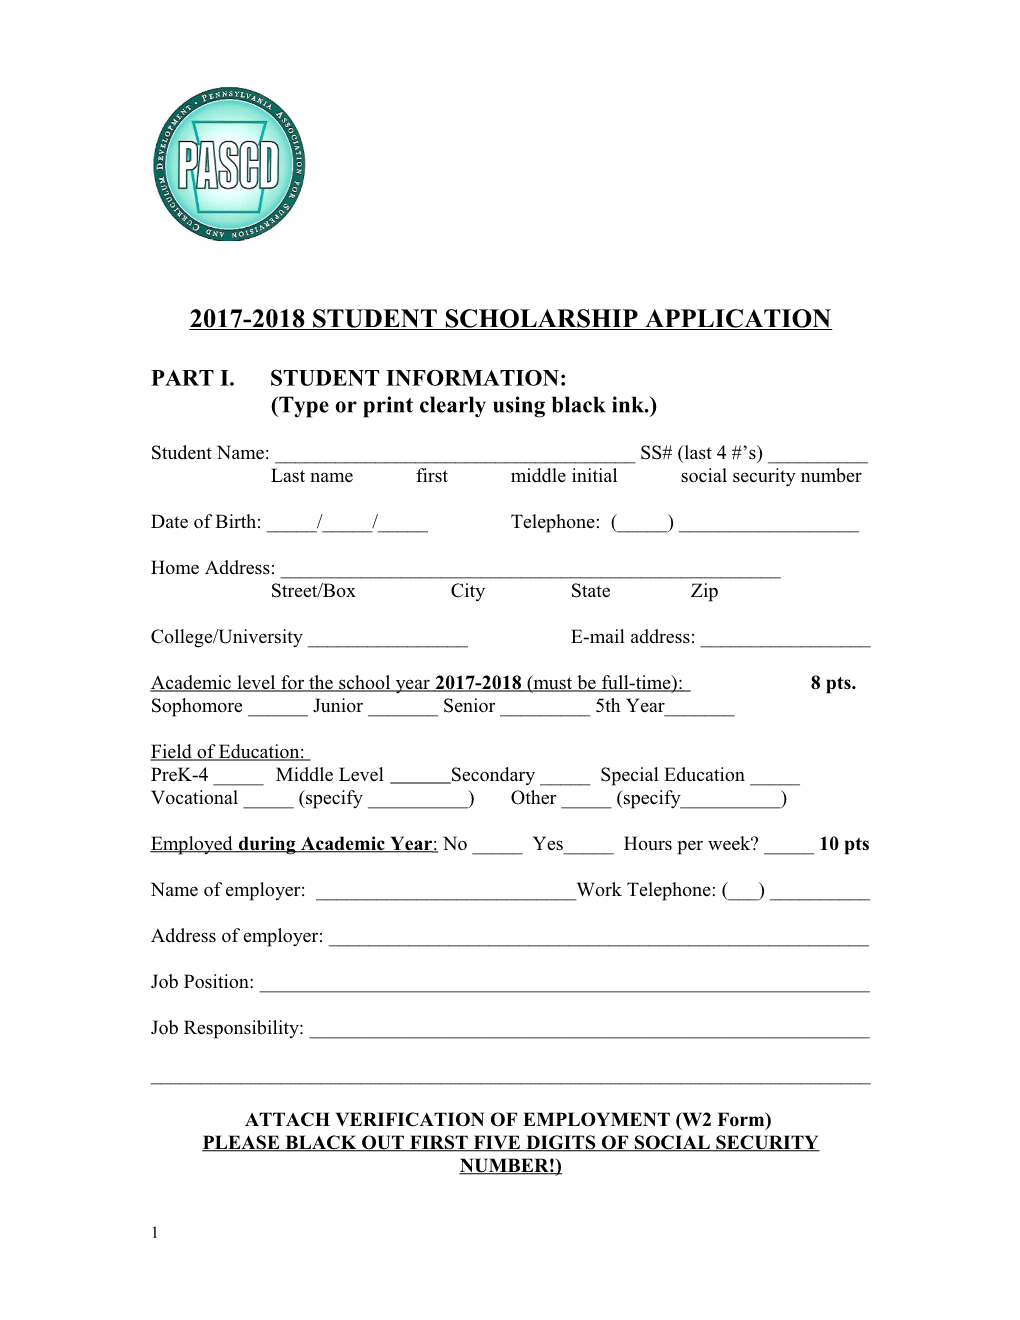 2017-2018 Student Scholarship Application